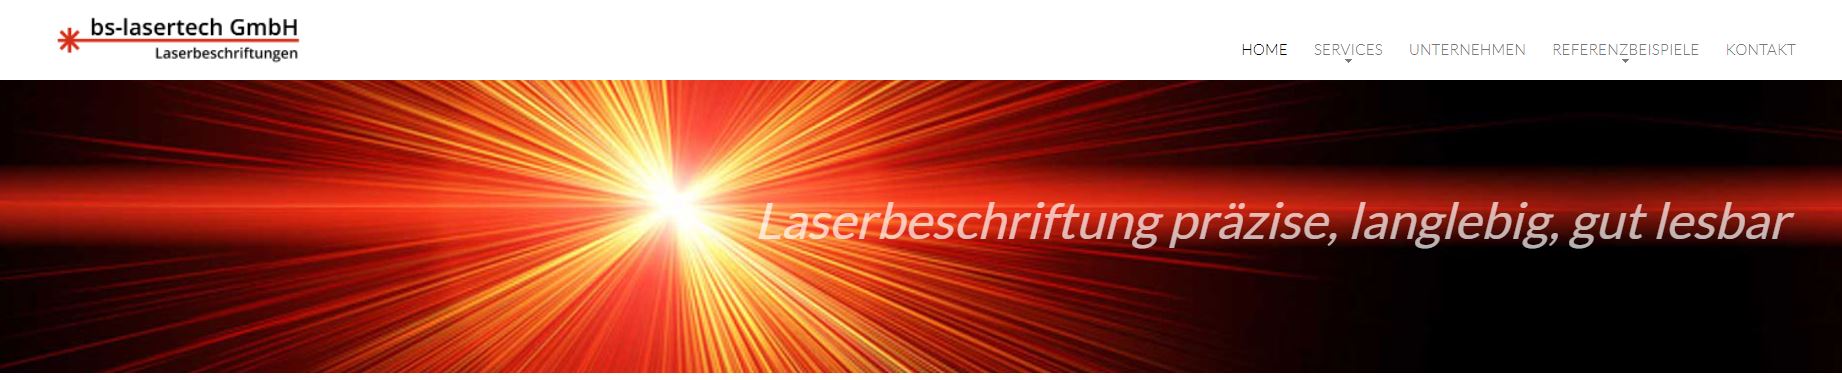 bs lasertech